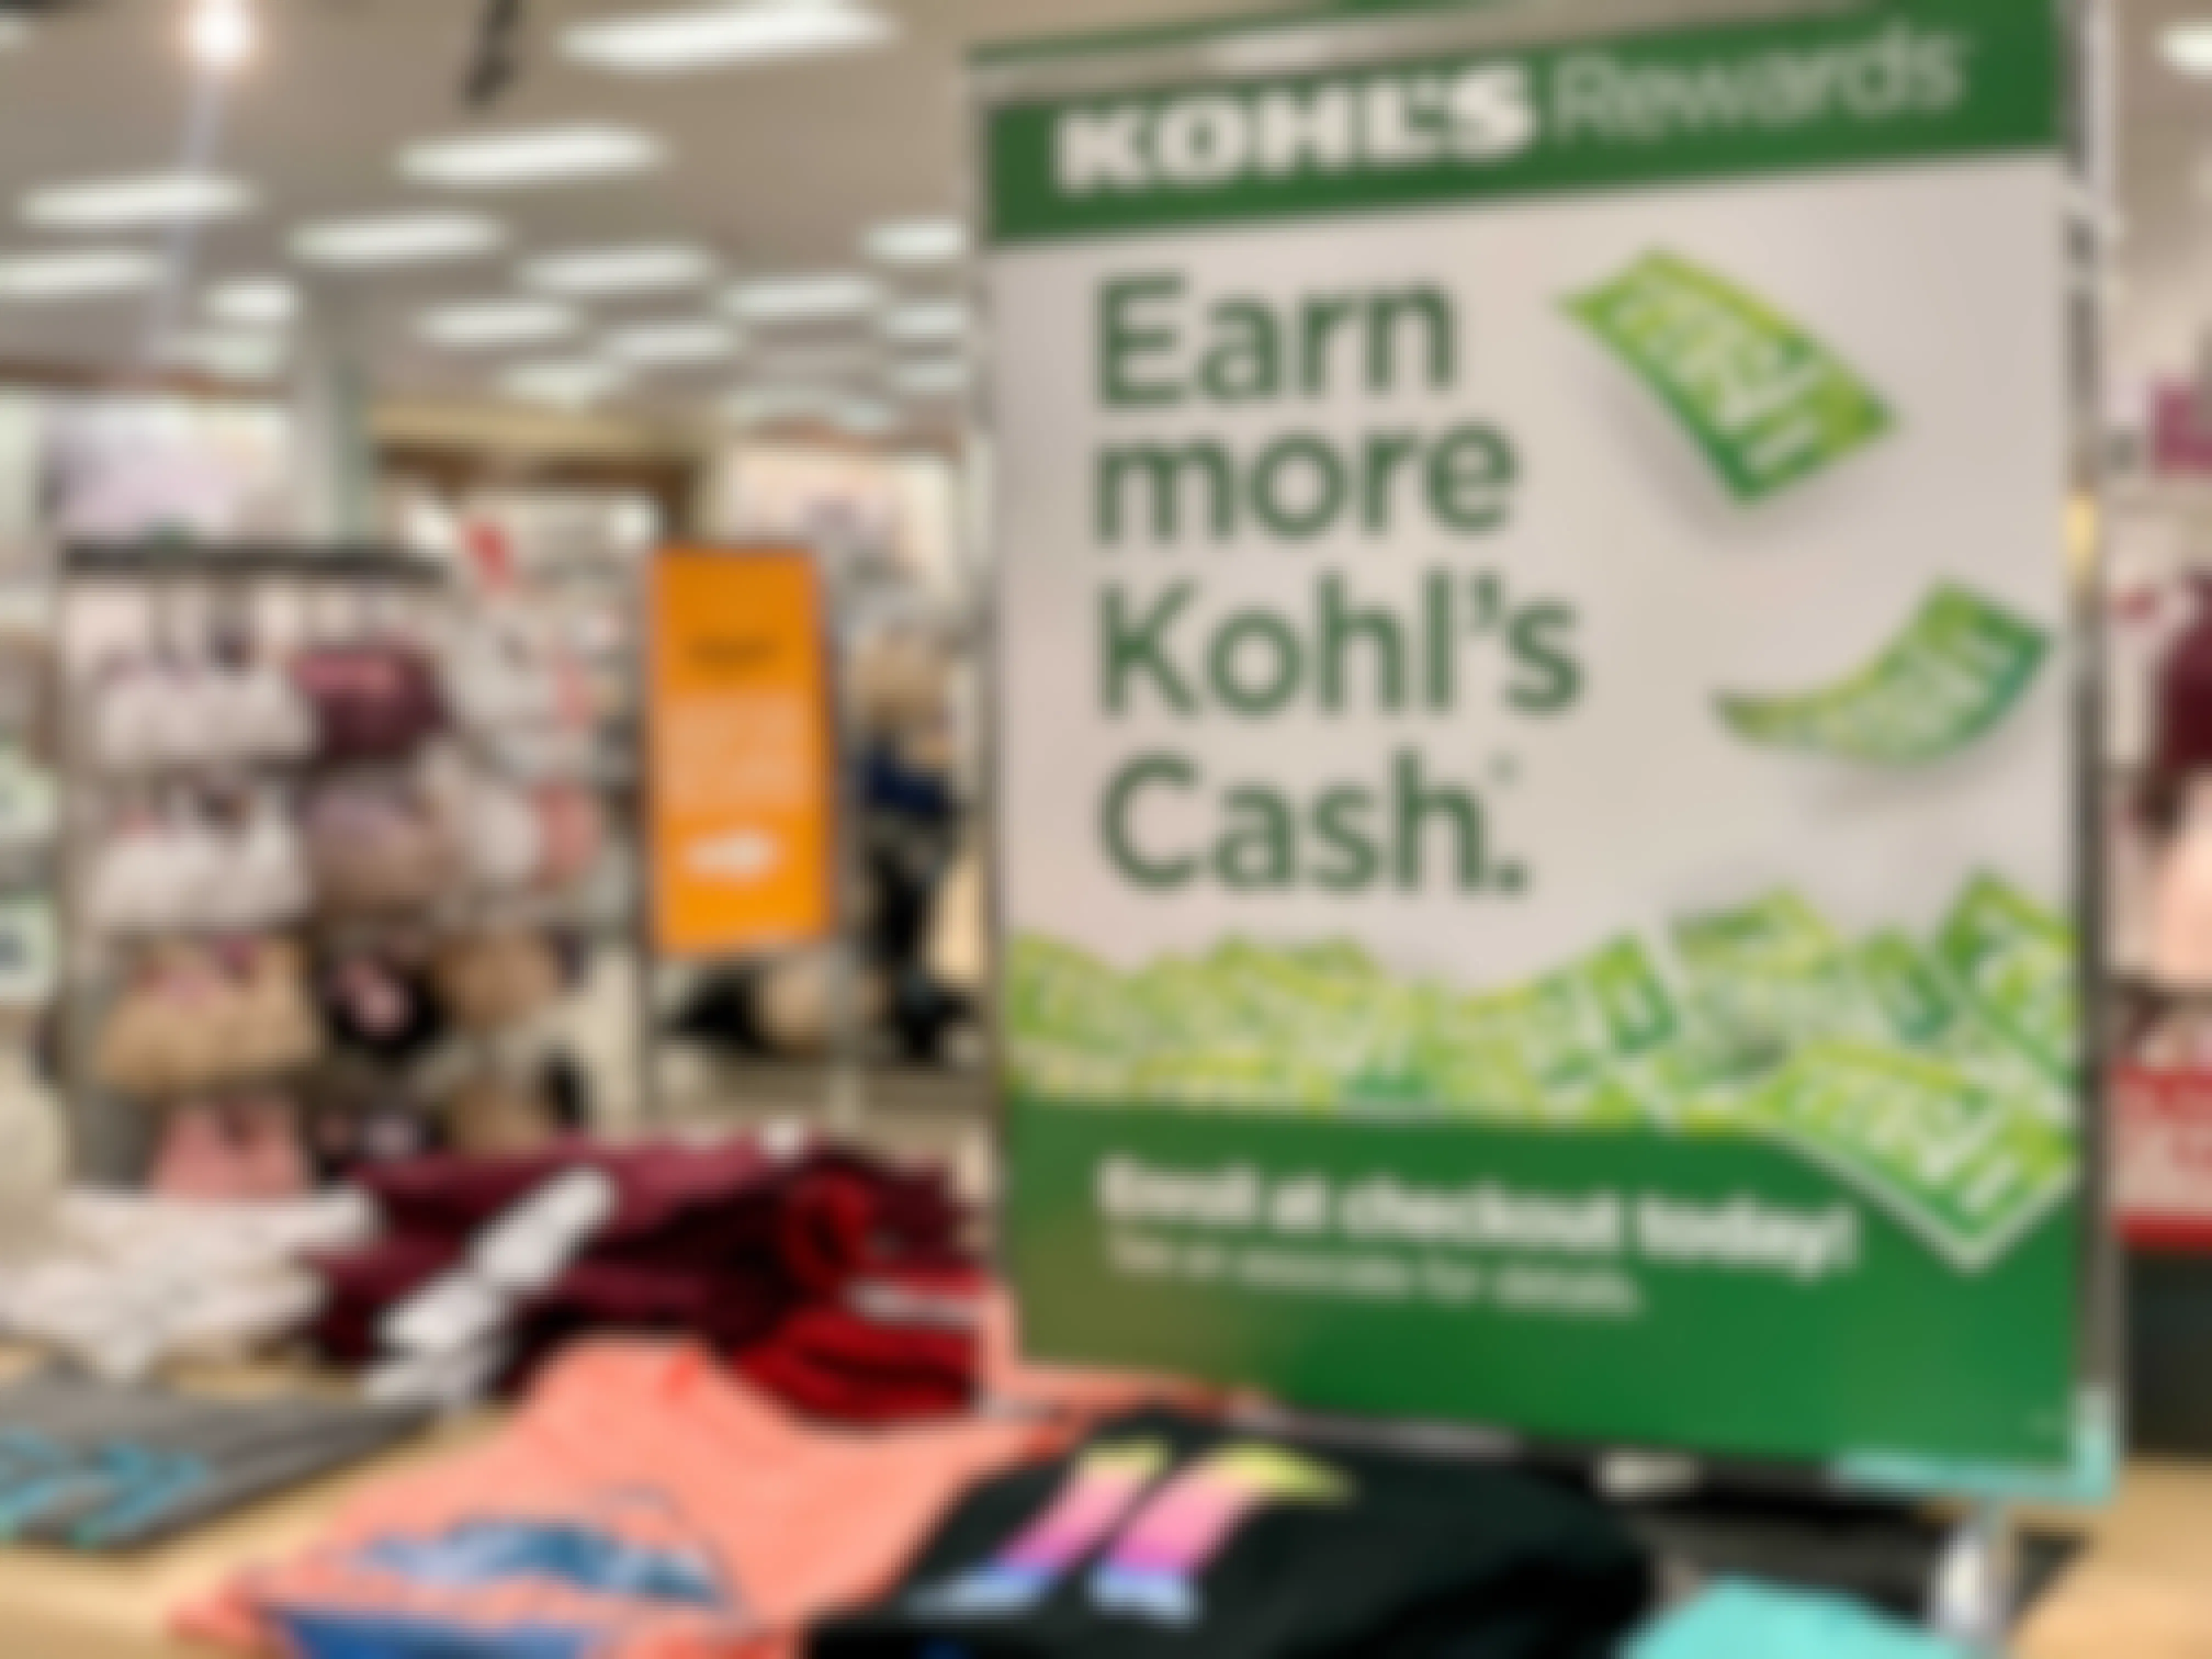 Kohls rewards earn more kohls cash sign in store on tee shirt display stand